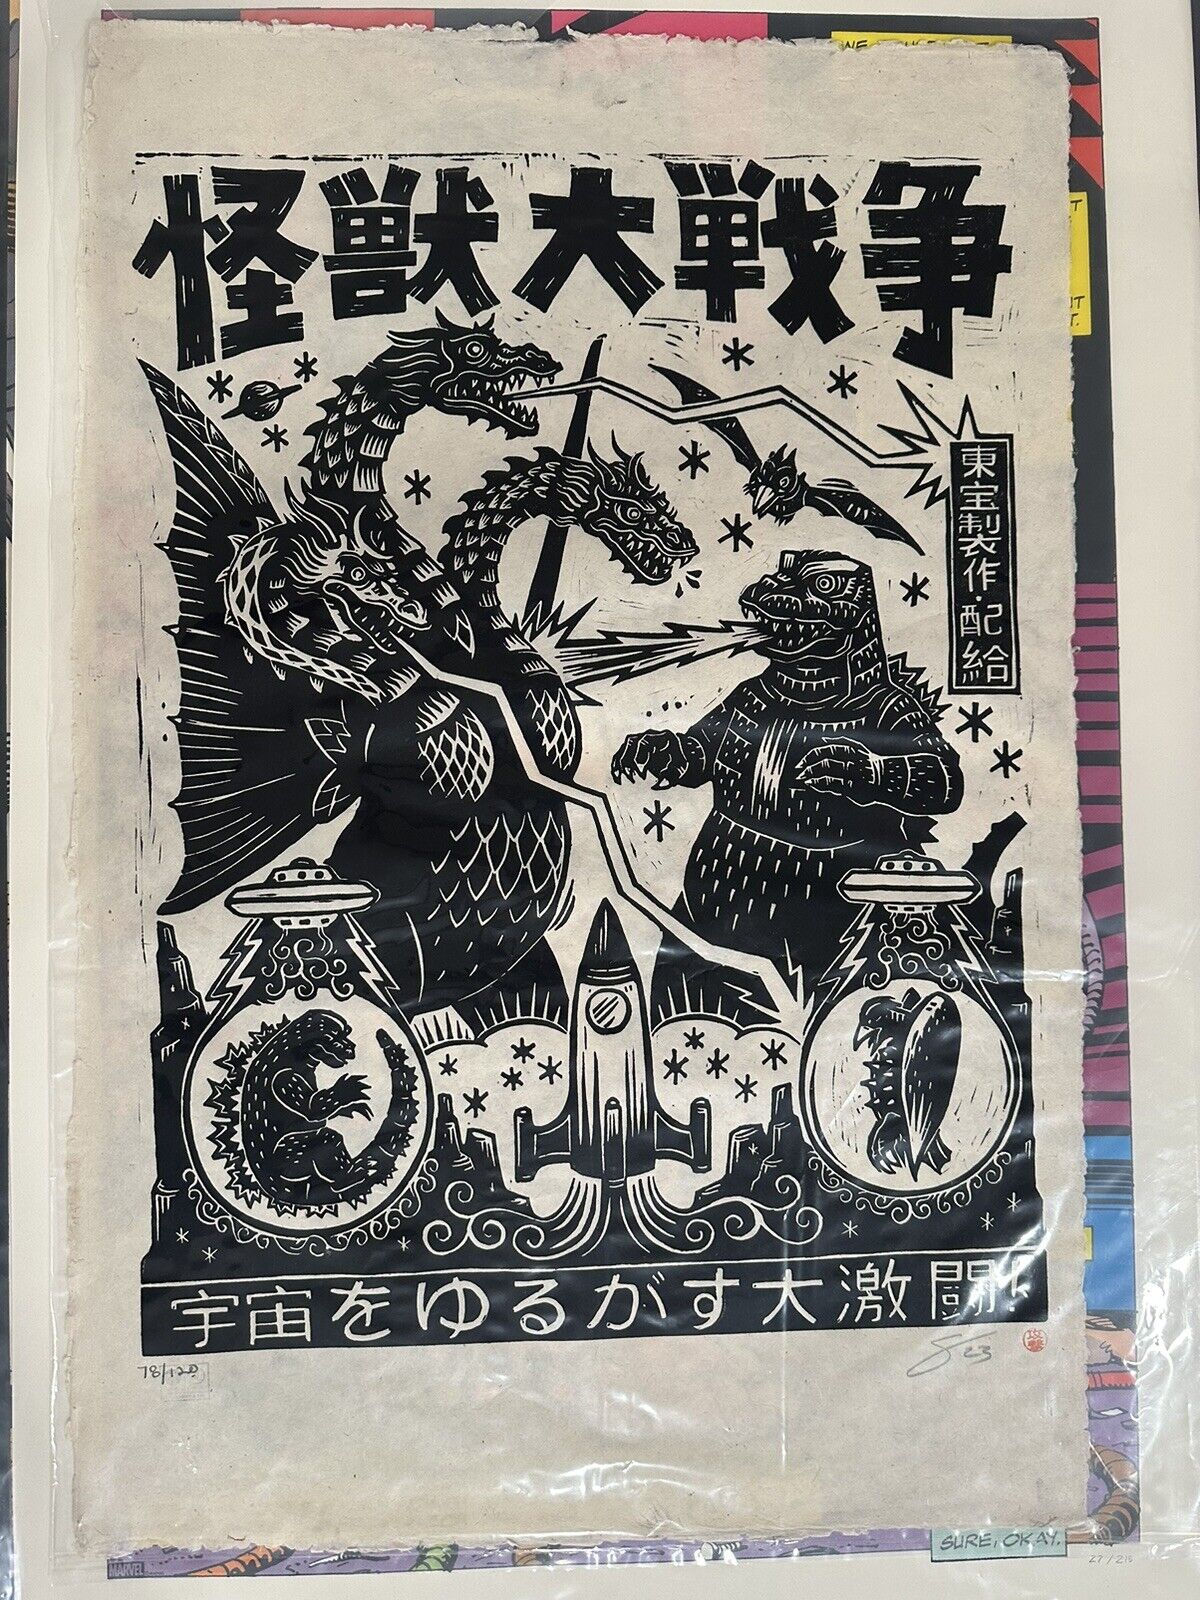 Invasion of Astro-Monster Linocut Poster